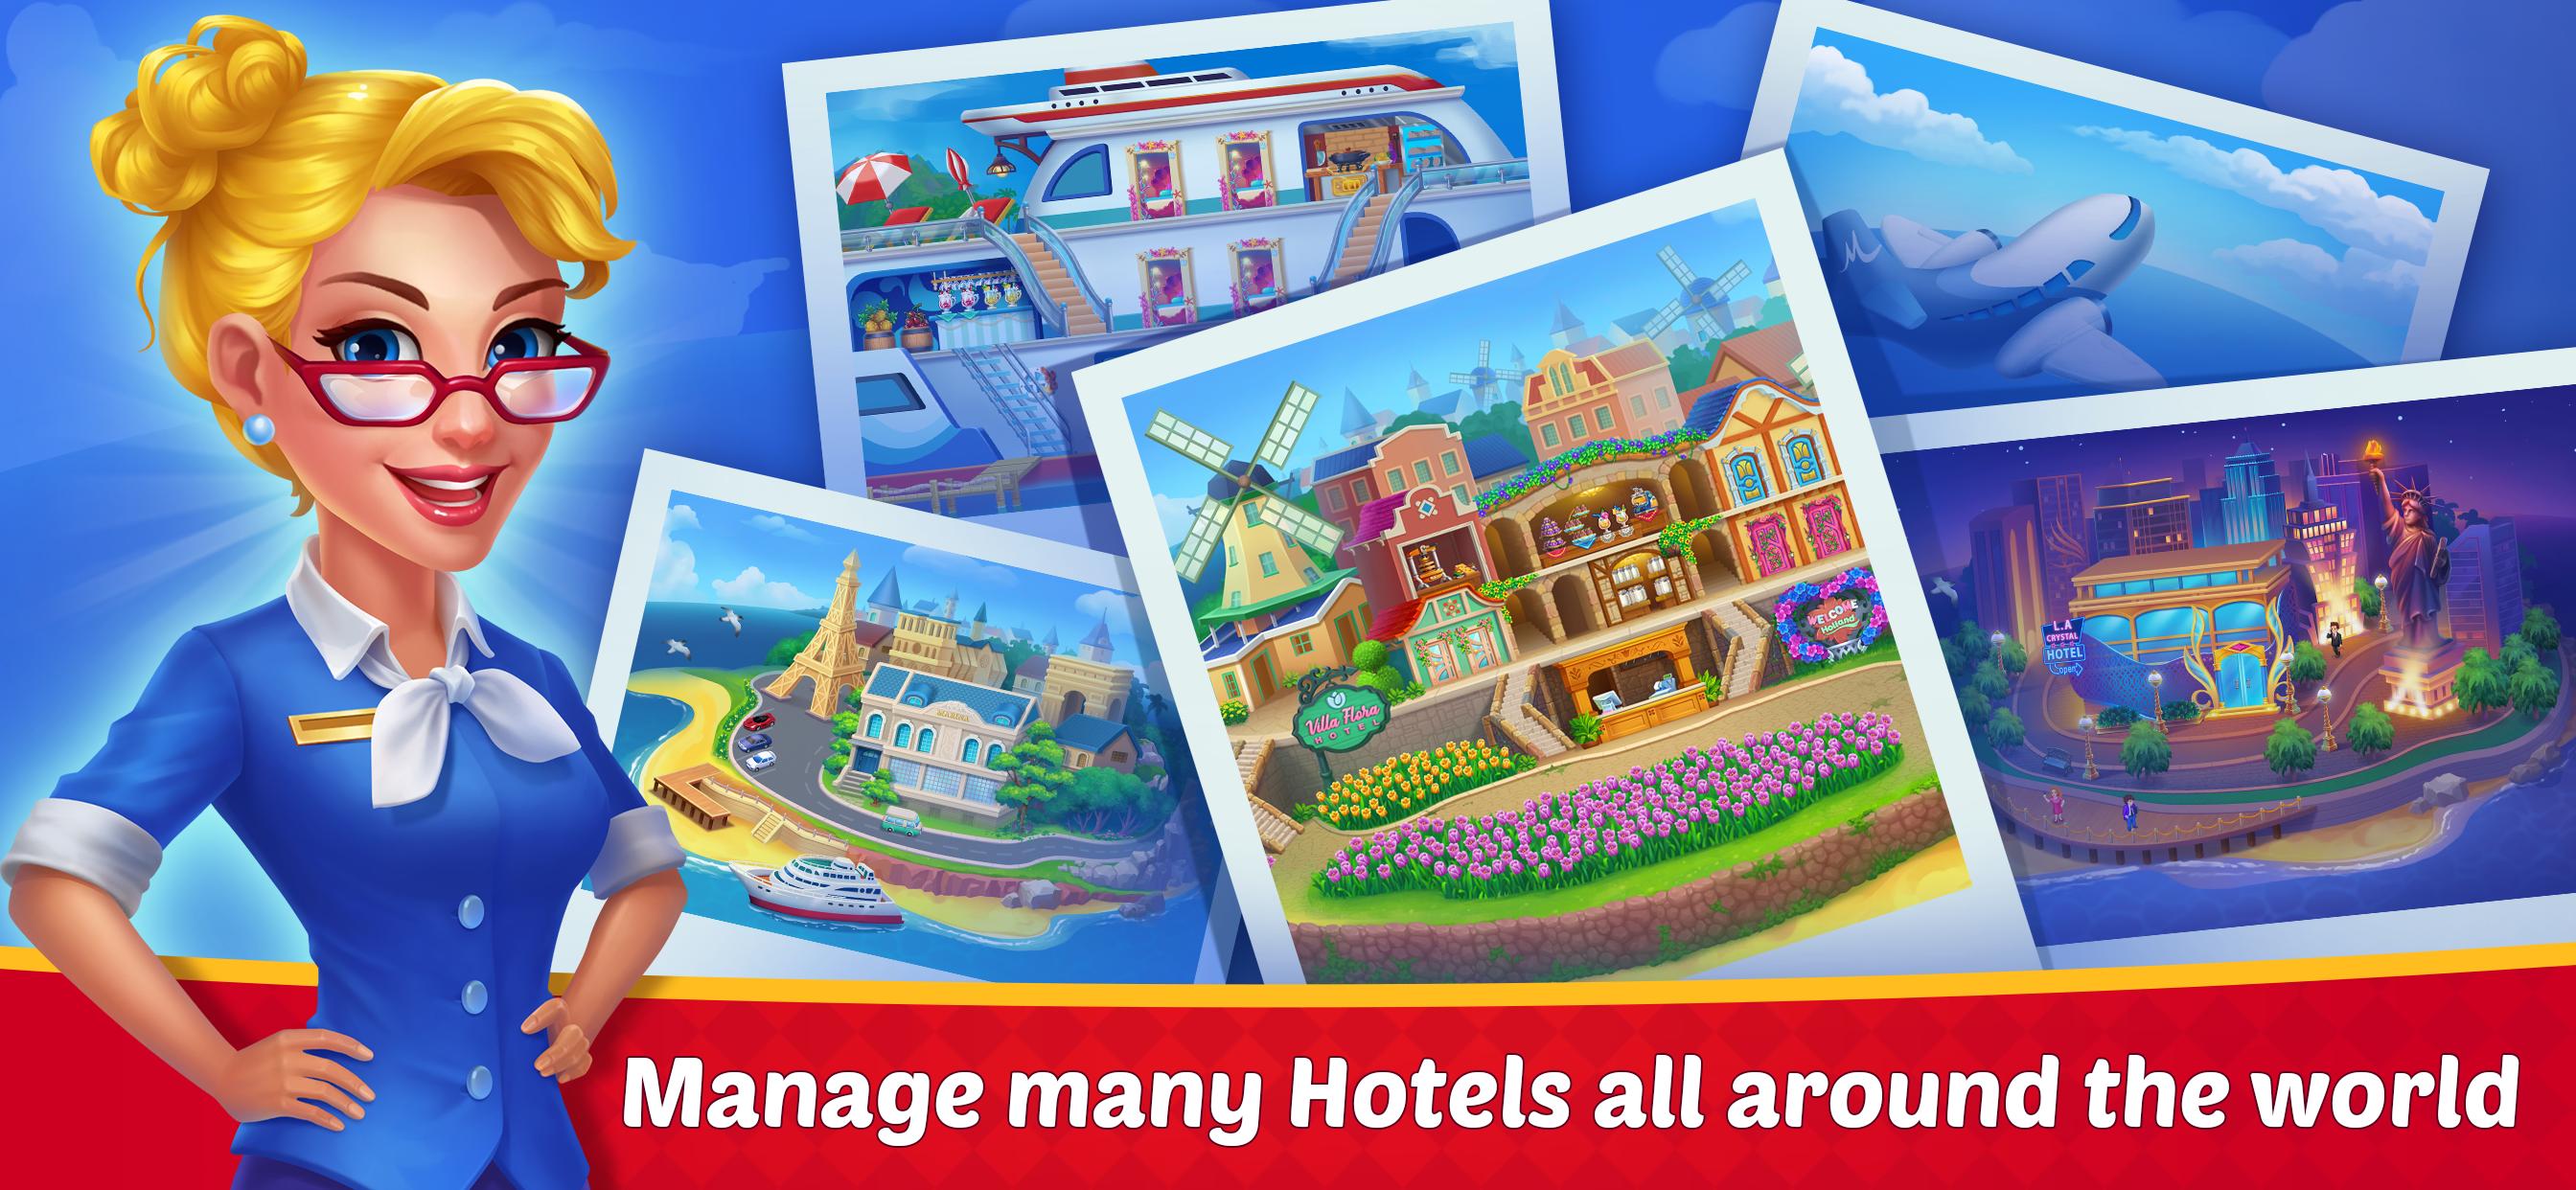 Dream Hotel Hotel Manager Simulation games 1.2.4 Screenshot 17